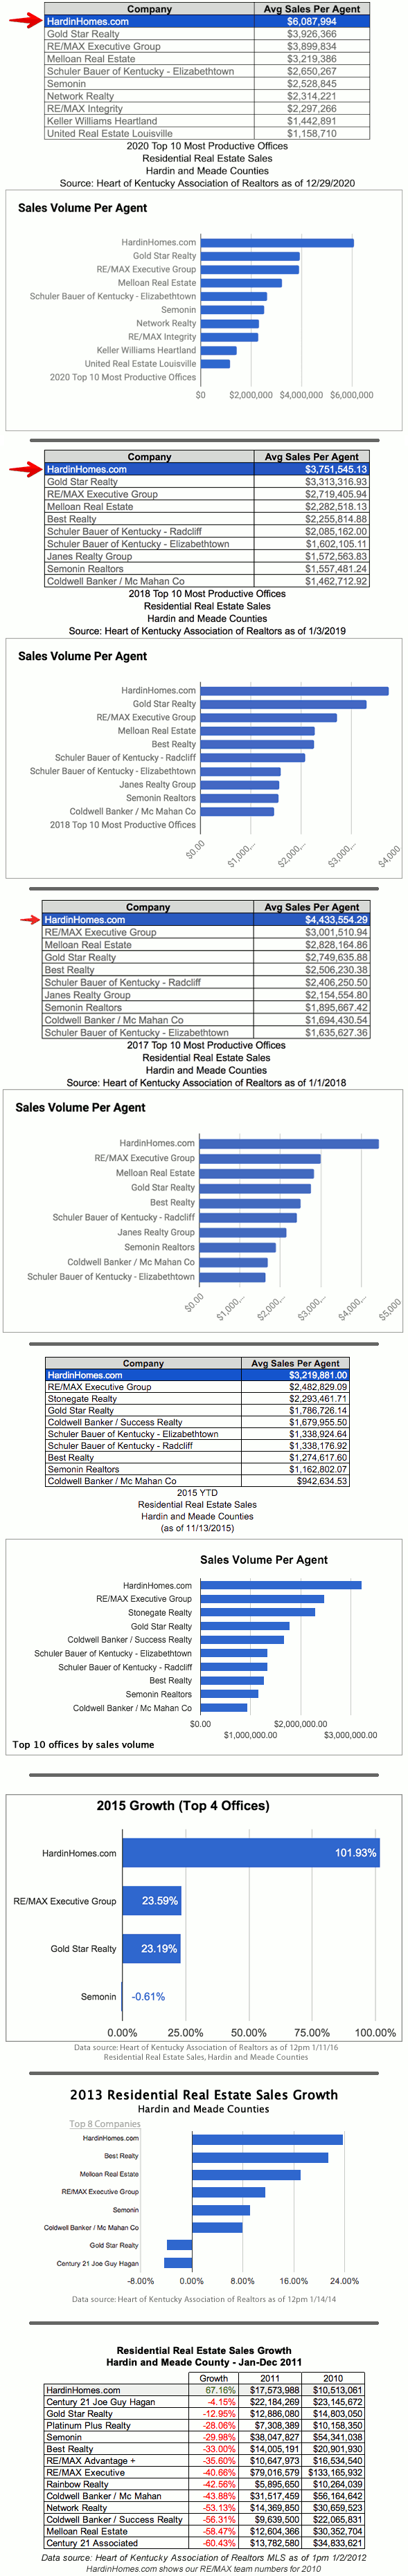 Elizabethtown real estate market sales statistics